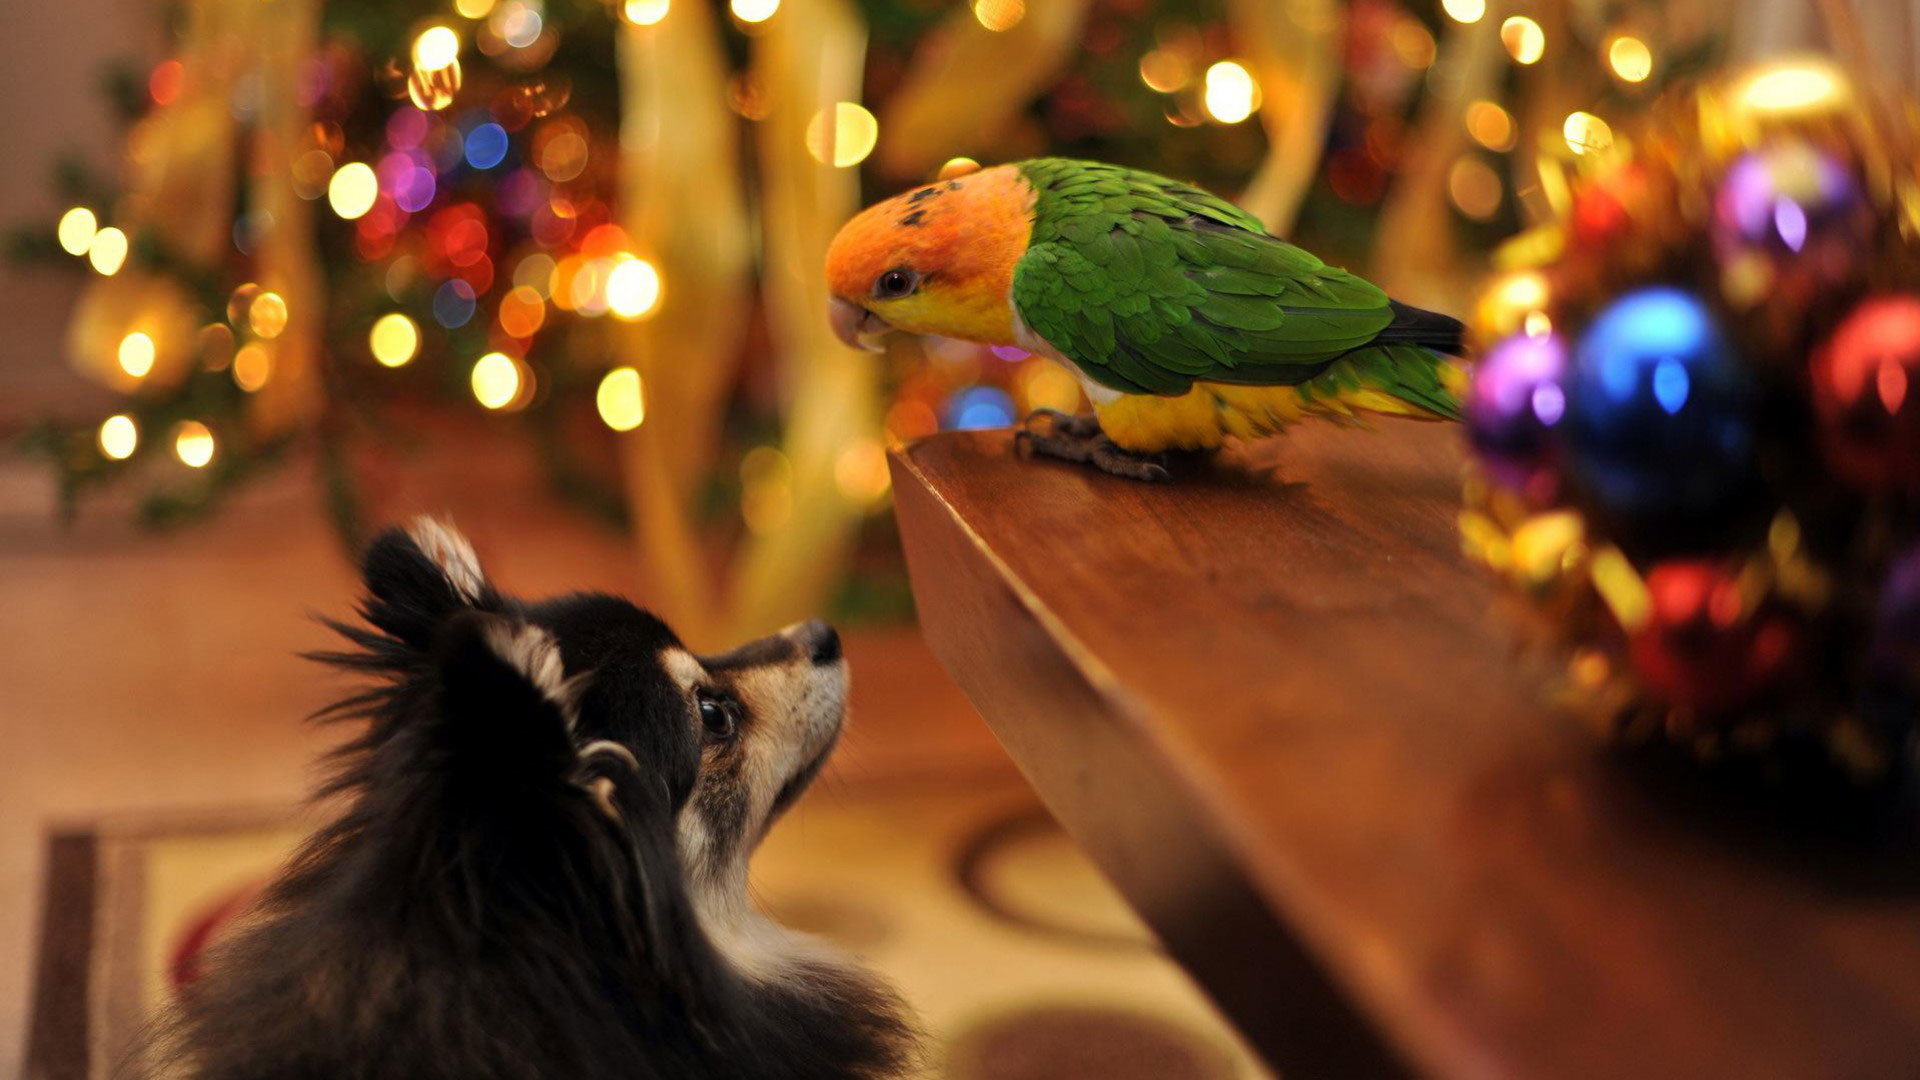 1920x1080 hd pics photos beautiful dog parrot christmas celebration with pet animals  hd quality desktop background wallpaper